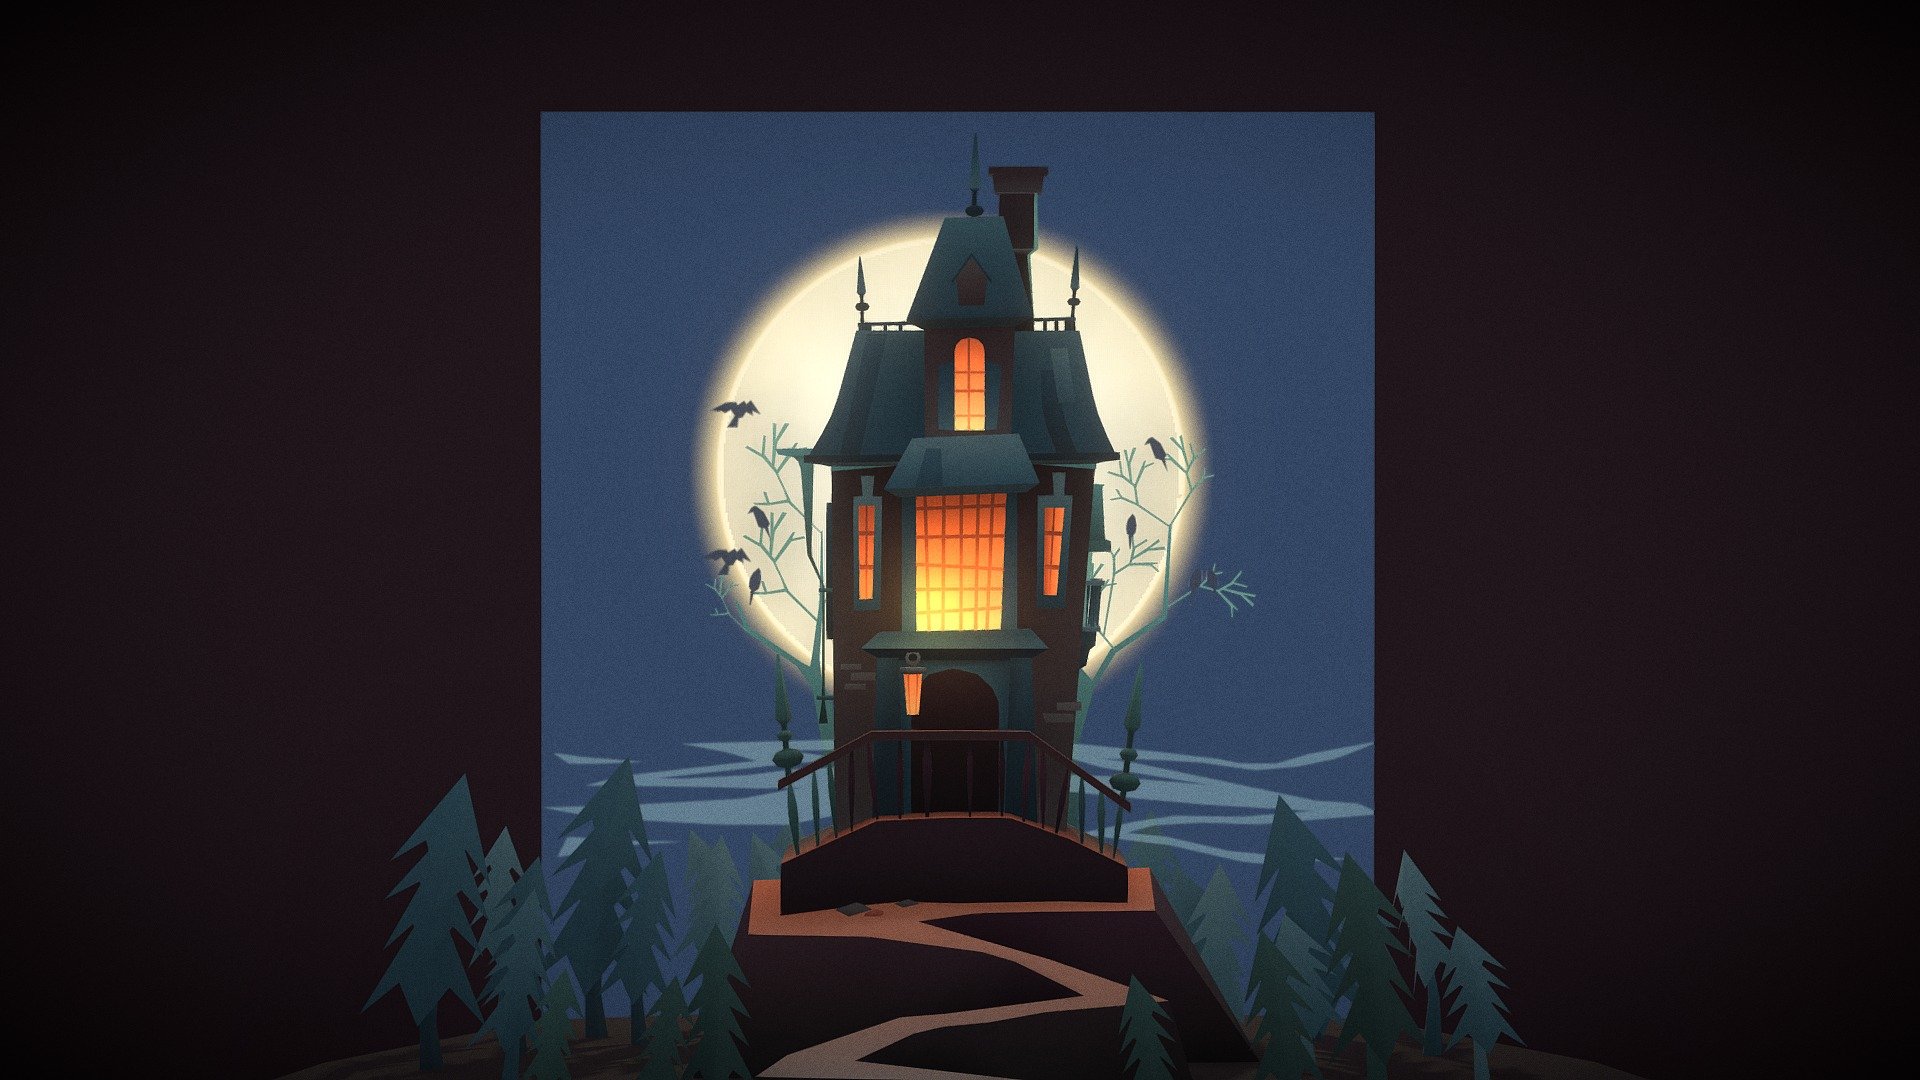 Kooky Spooky House on Haunted Hill